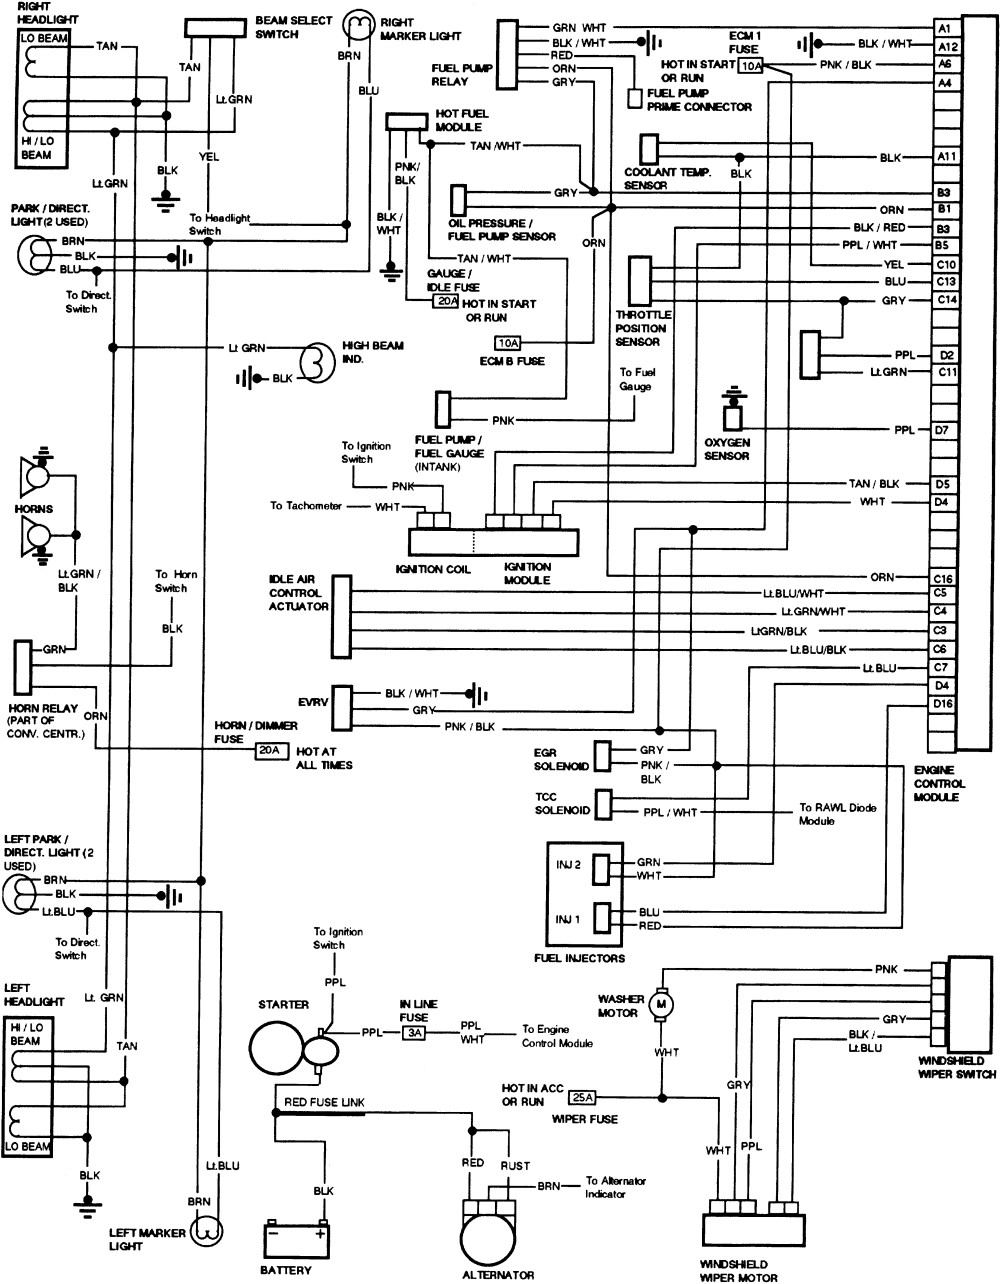 Chevy P30 Motorhome Wiring Diagram Wiring Diagrams Schematics C10 Wiring Diagram 1988 P30 Wiring Diagram